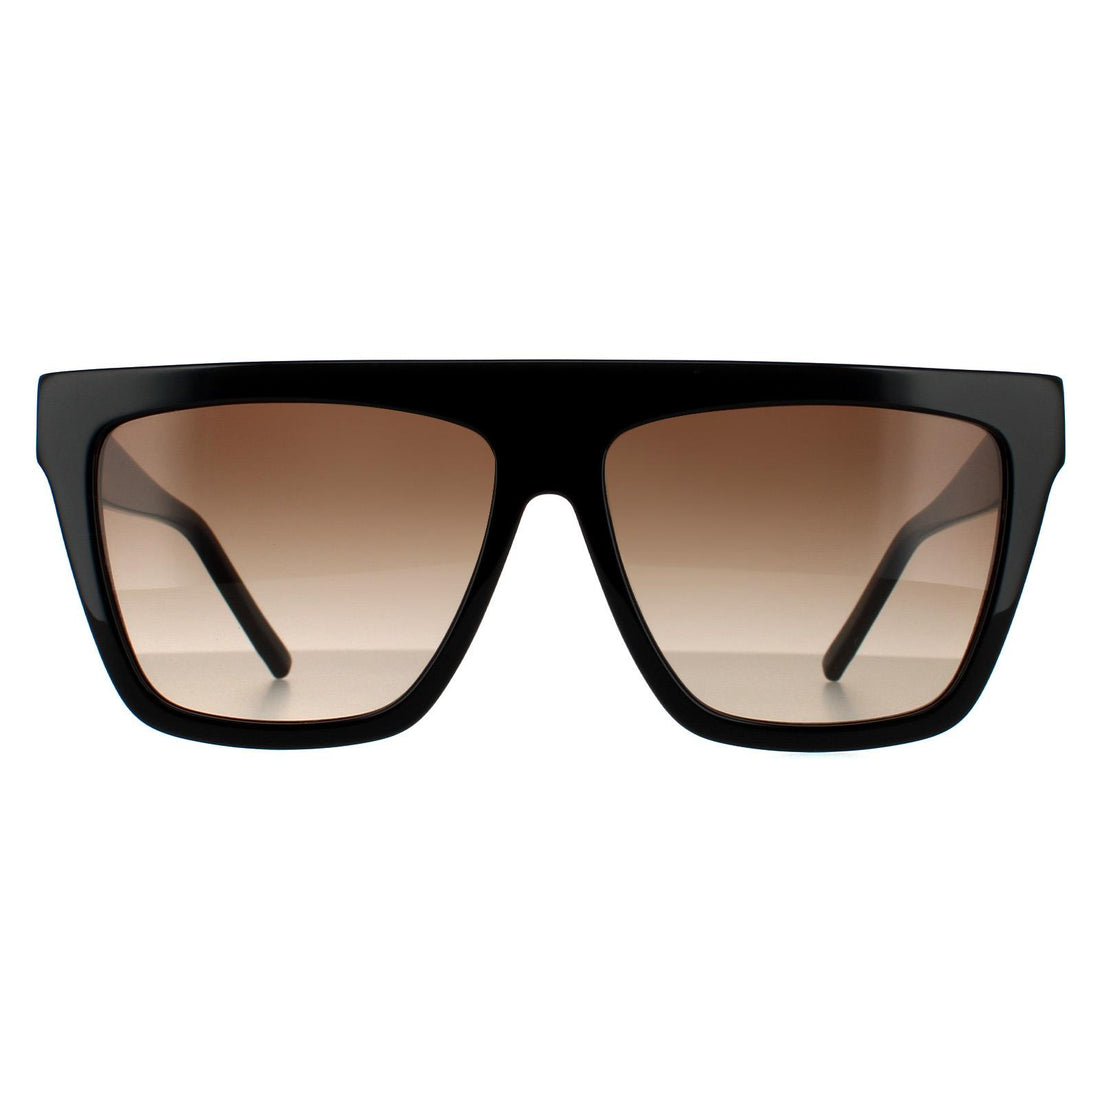 Hugo Boss BOSS 1153/S Sunglasses Shiny Black / Brown Gradient